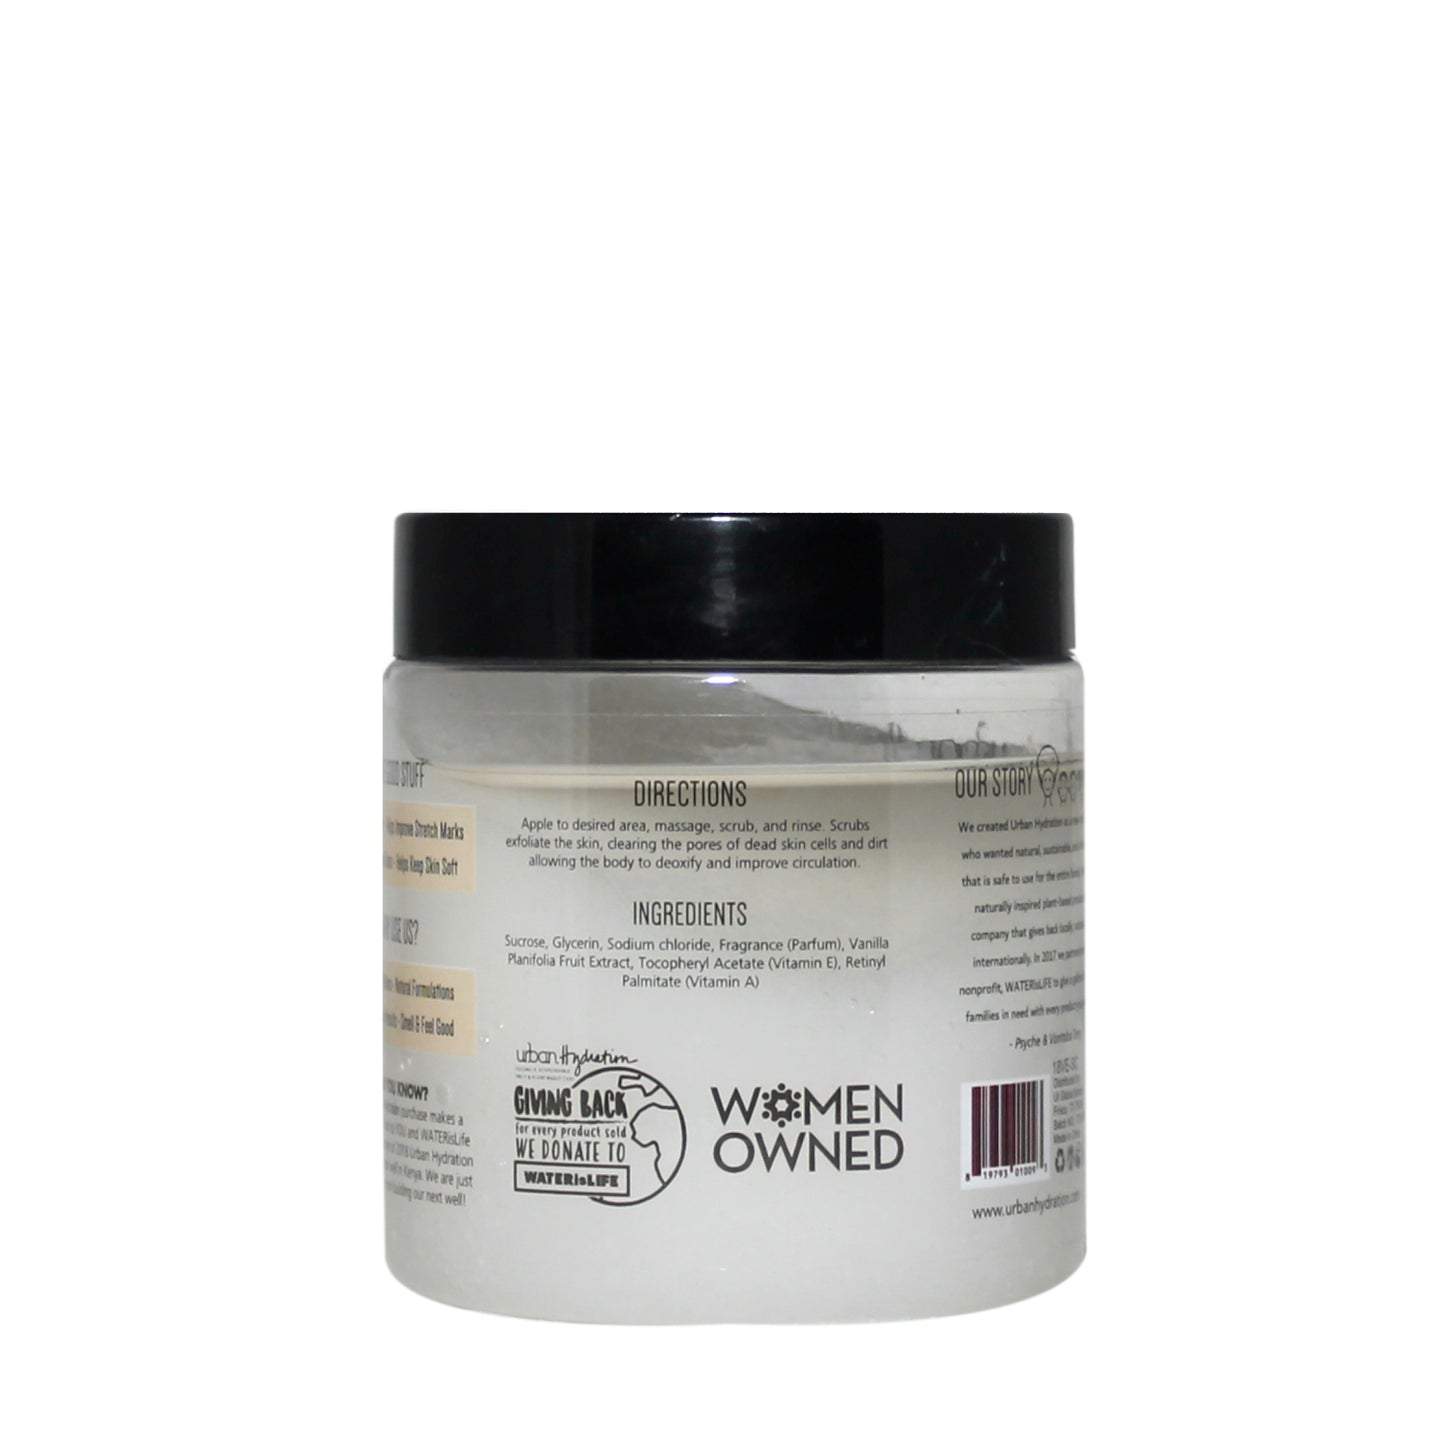 Renew & Restore Vanilla Sugar Scrub – Body Scrub